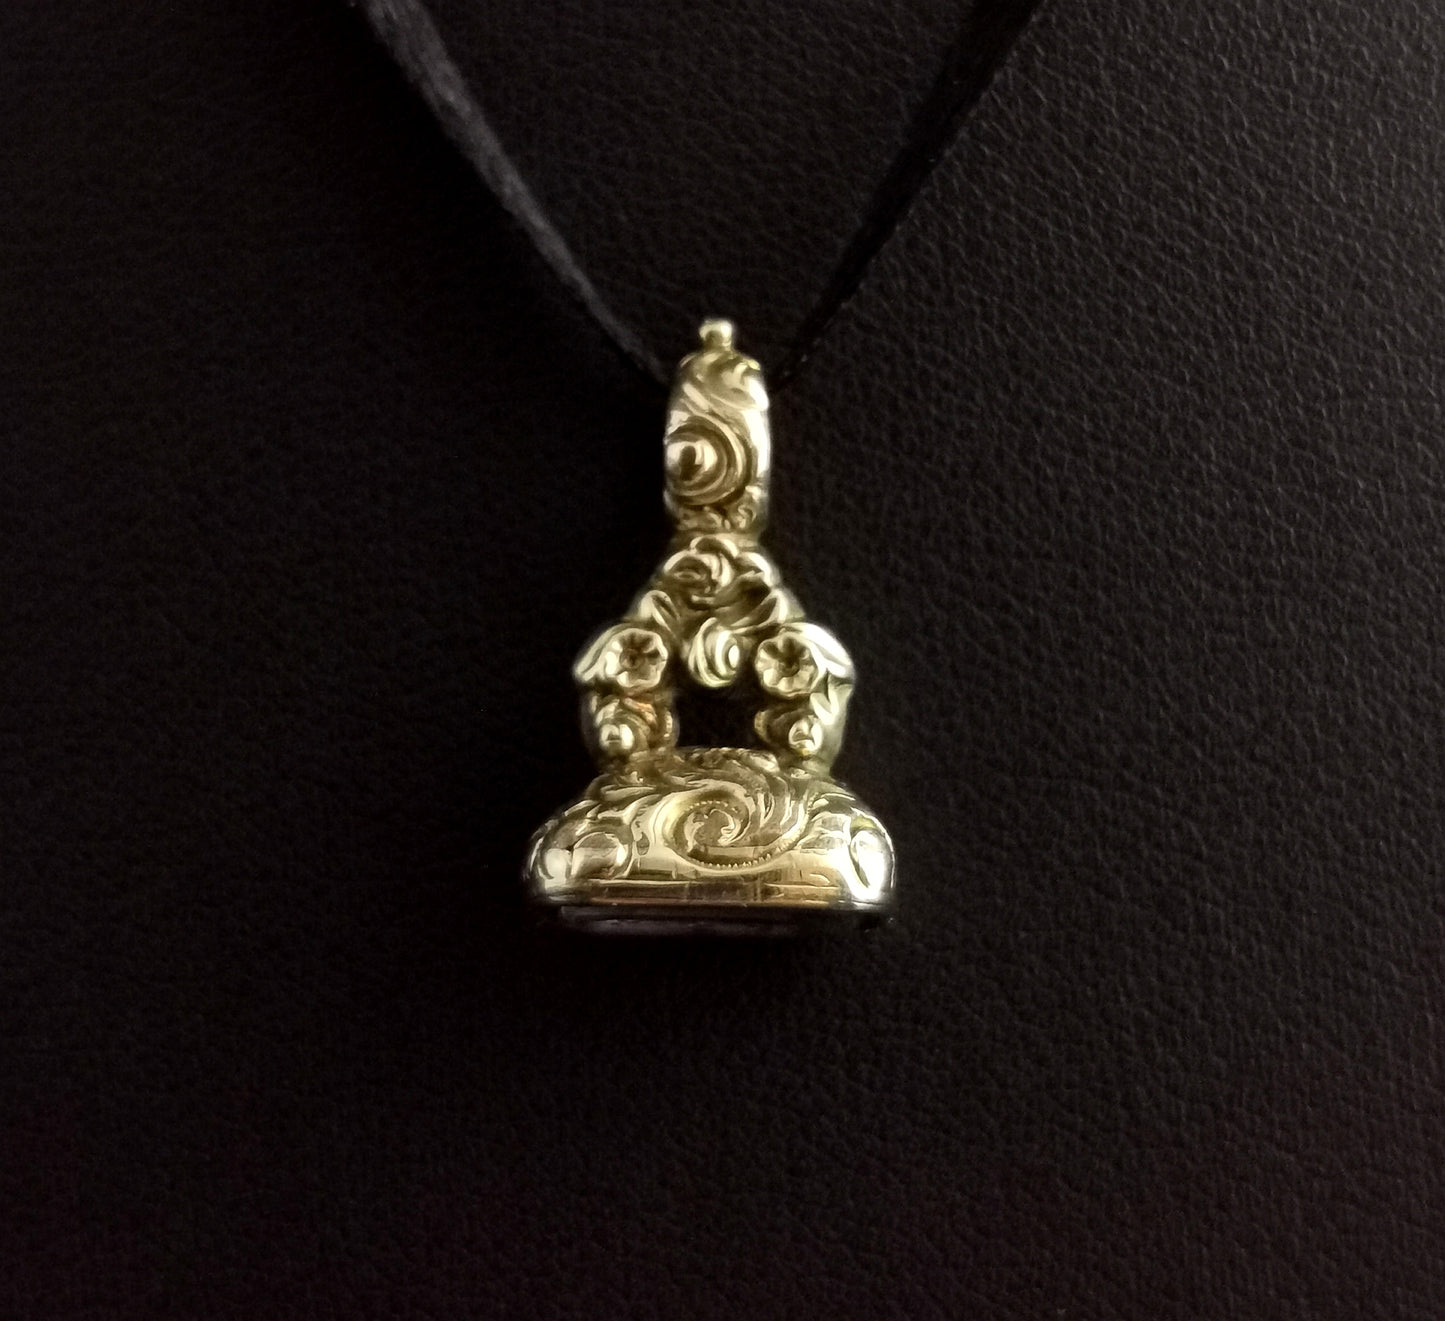 Antique Georgian seal fob pendant, rolled gold and quartz